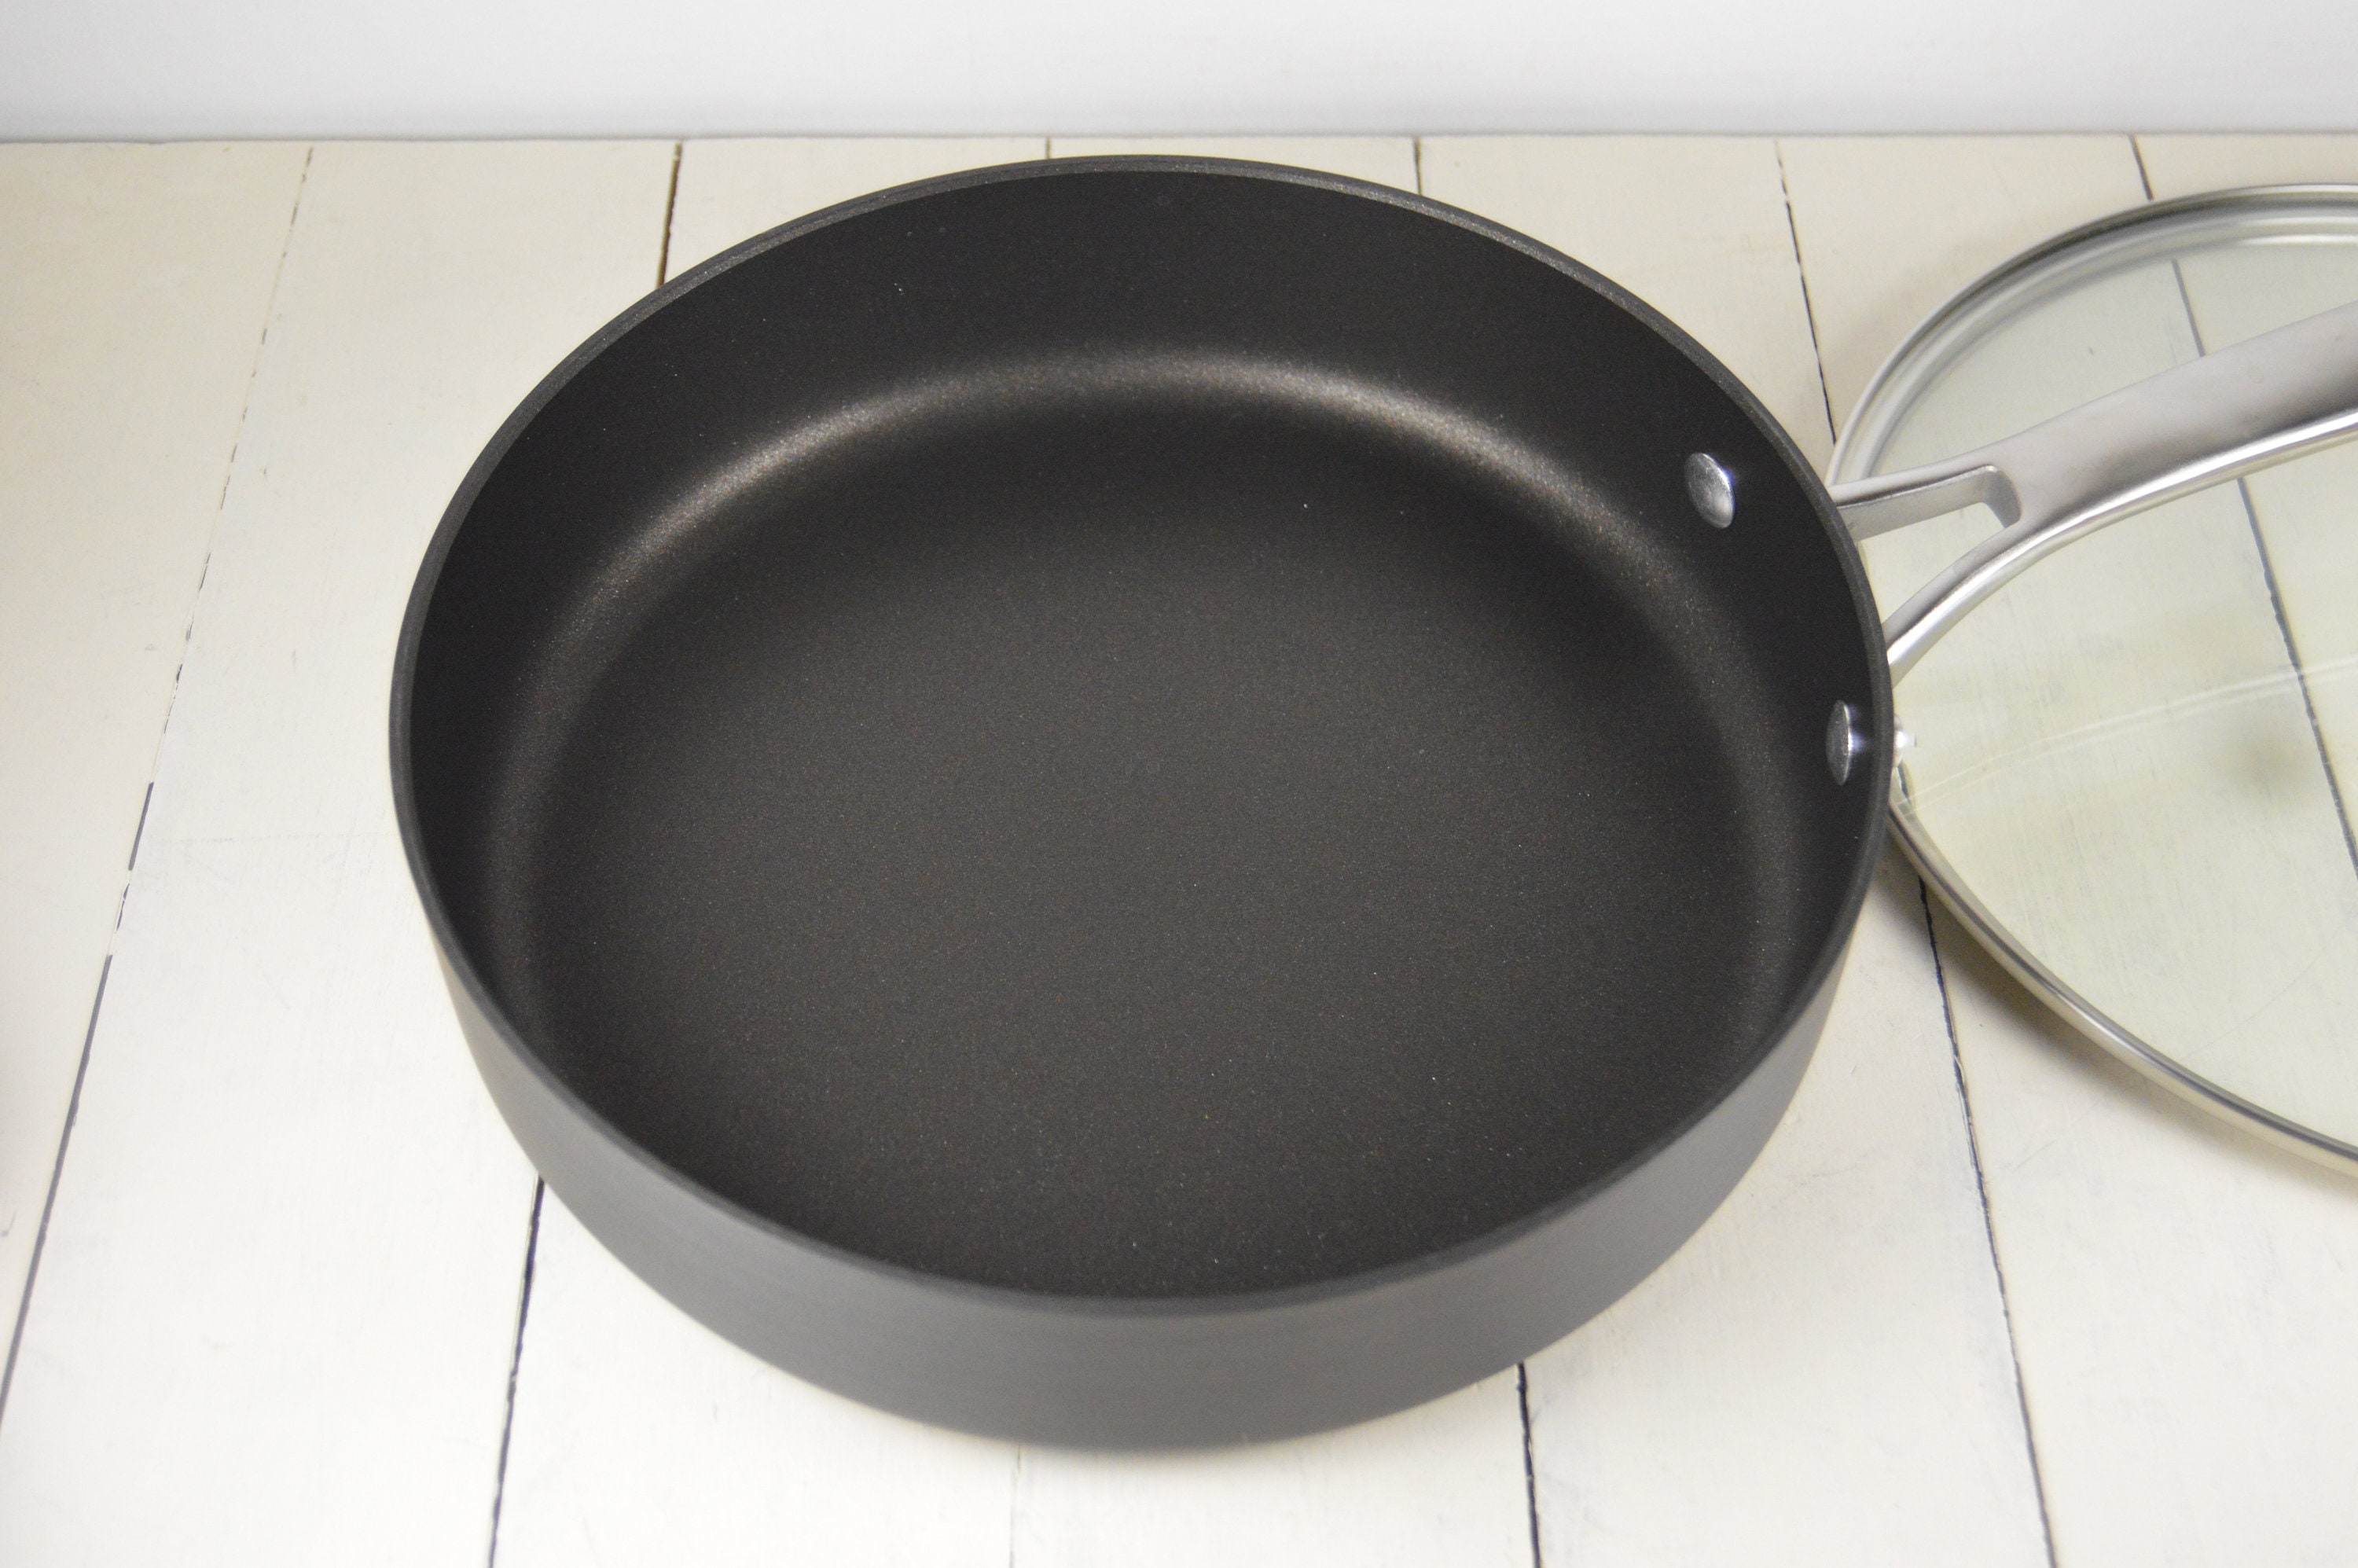 Calphalon Classic 5003 3 Quart Saute Pan With Lid Non-stick -  Norway